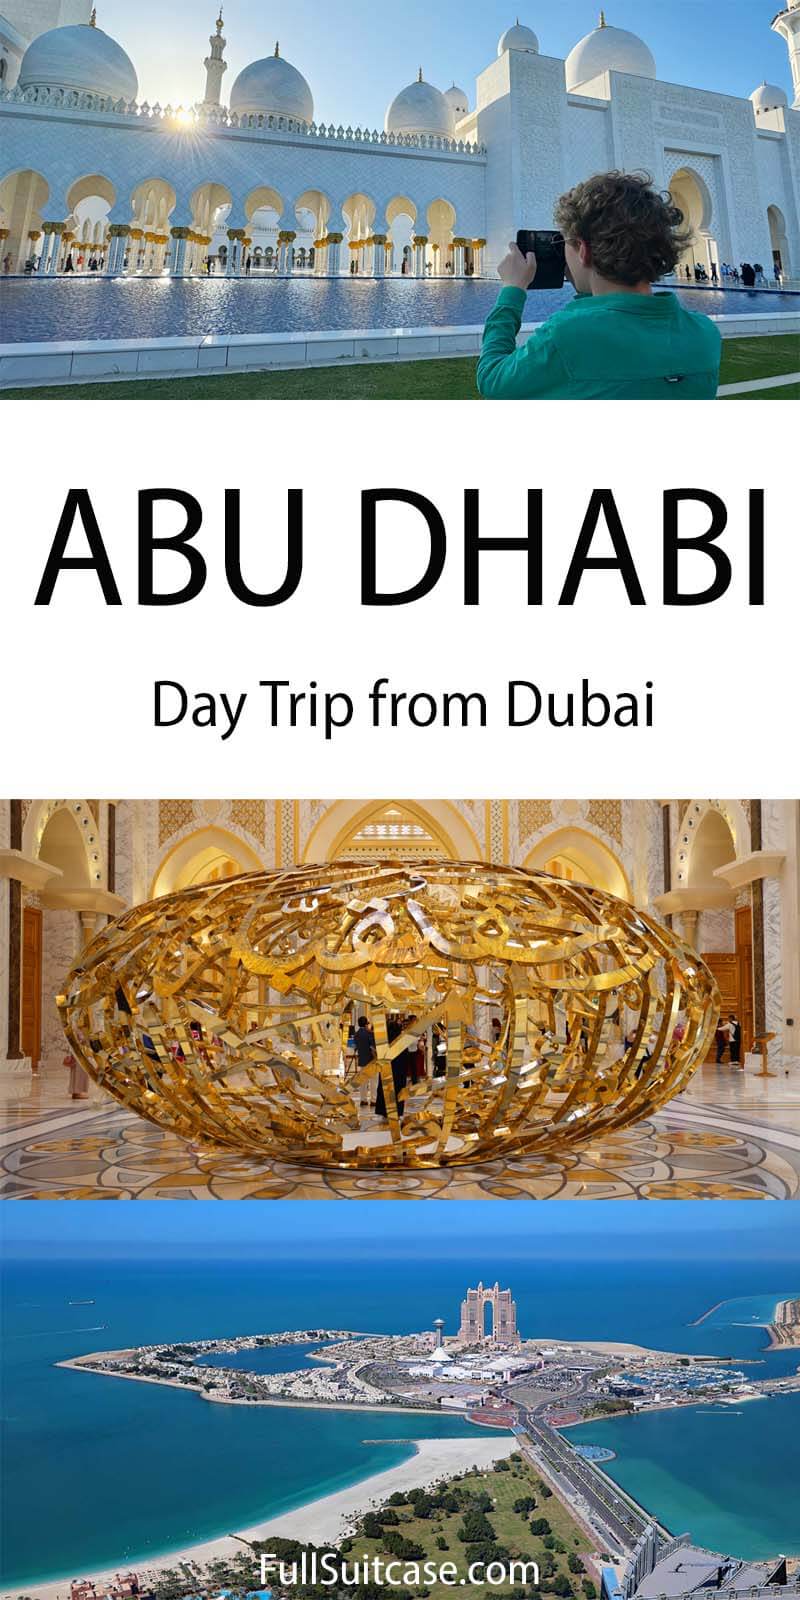 Abu Dhabi day trip from Dubai